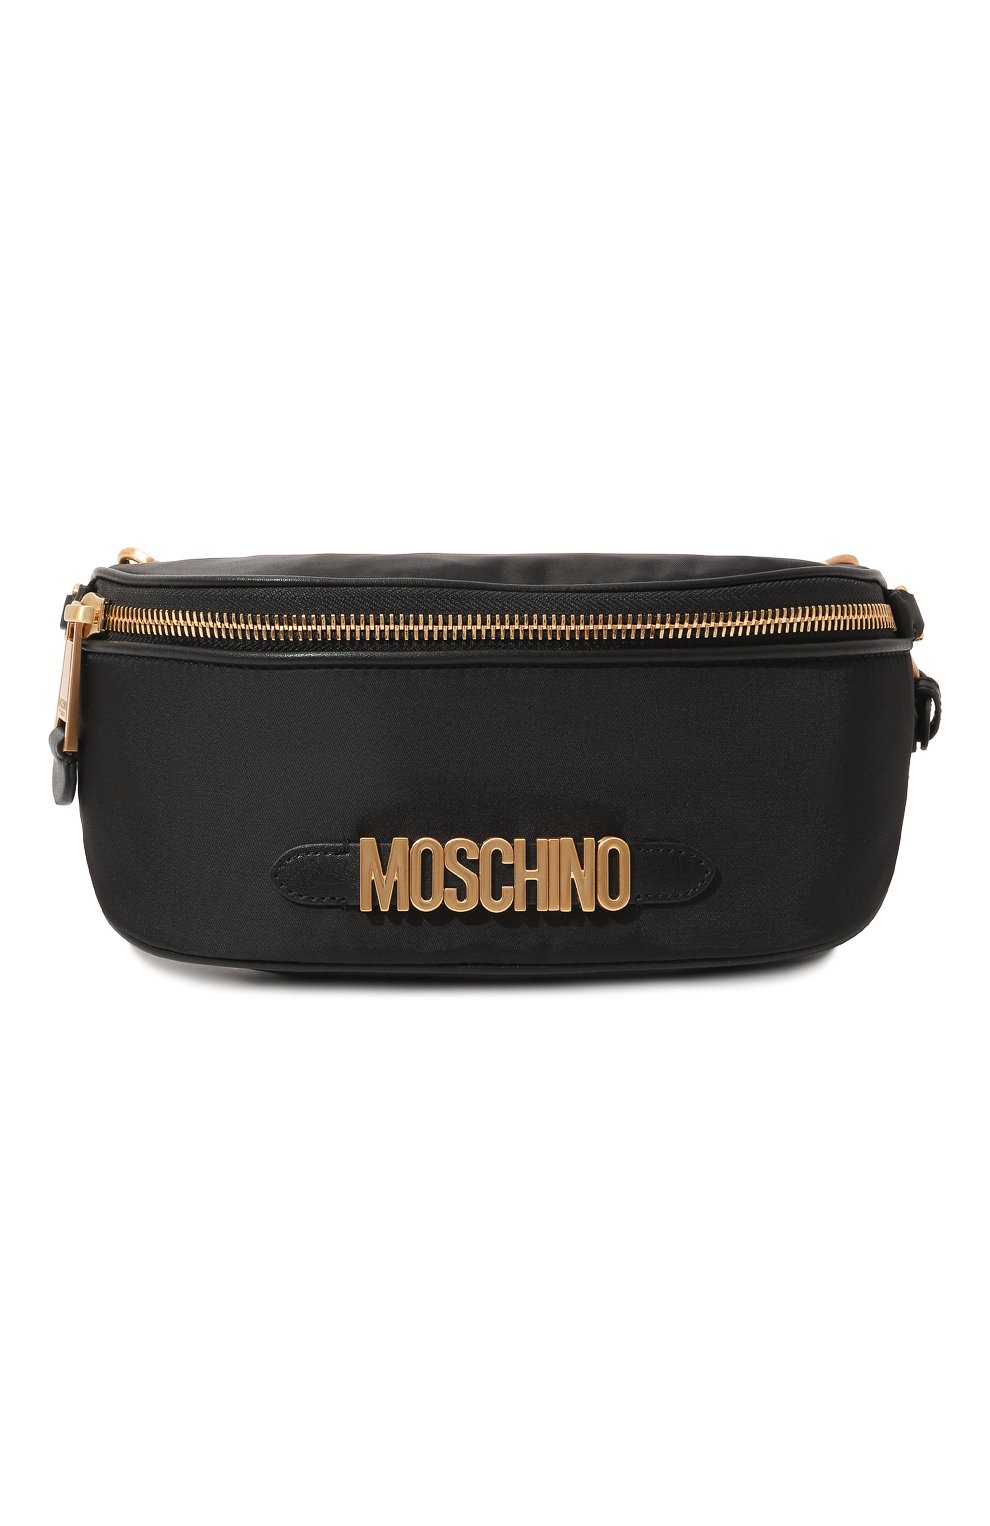 Поясная сумка Belt Moschino 2317 B7707/8202, цвет чёрный, размер NS 2317 B7707/8202 - фото 1